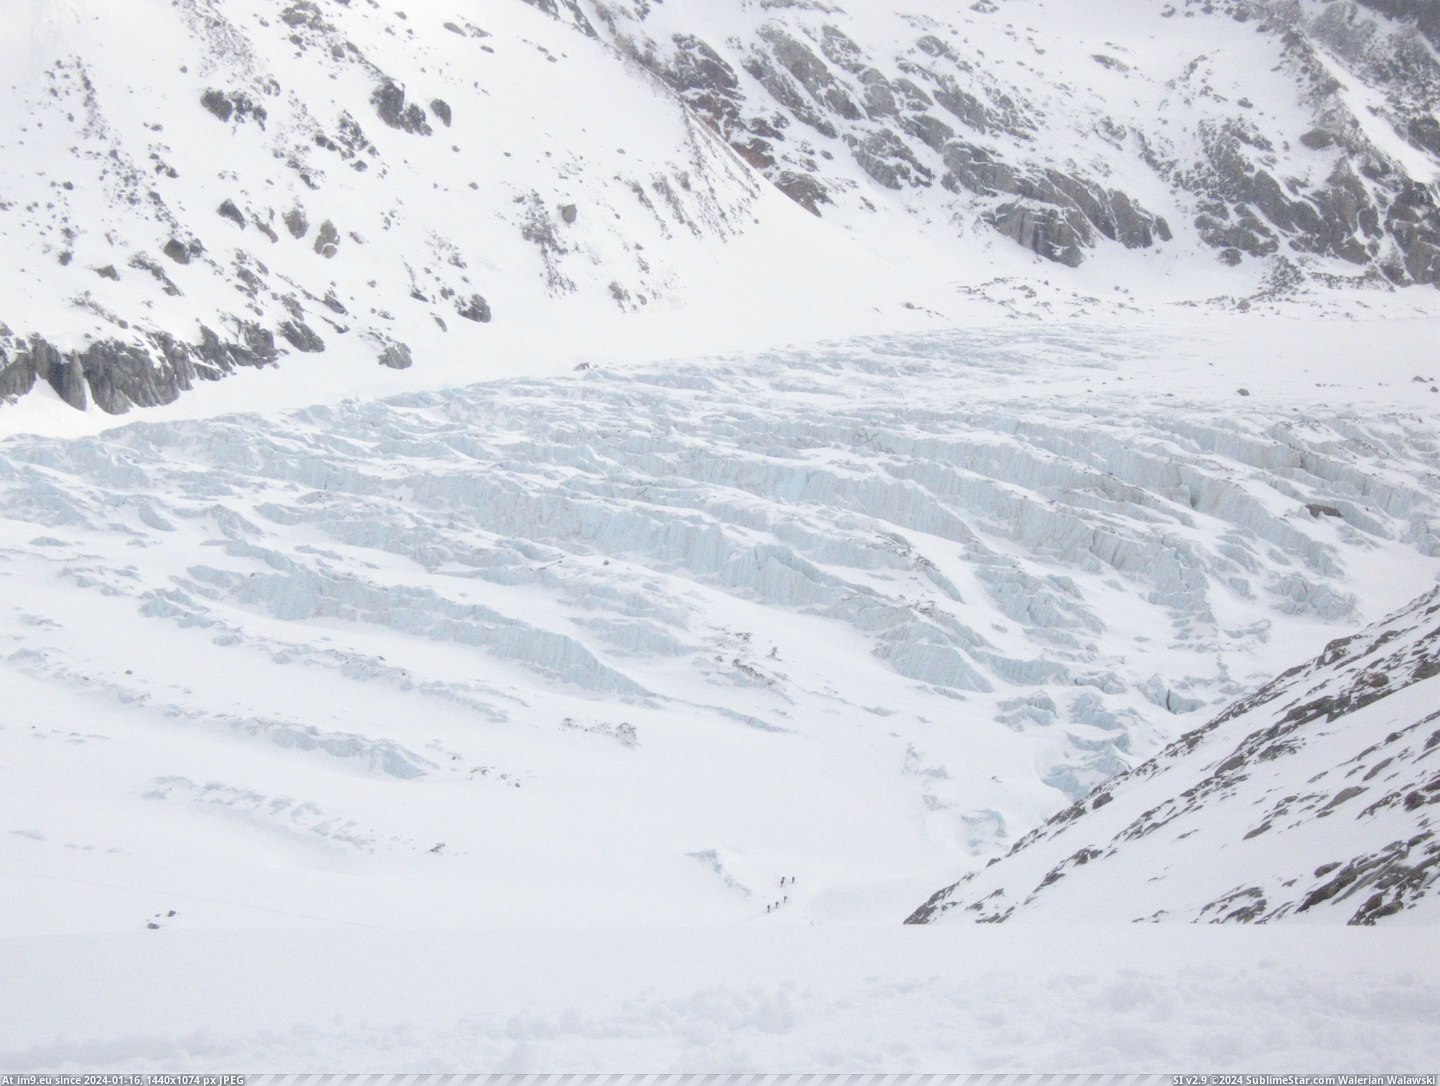 #For #Scale #Glacier #Hikers #Chamonix #Mer #Glace #France #3072x2304 #Zoom [Earthporn] Mer de Glace - Glacier in Chamonix, France. Zoom in on the hikers for scale. [3072x2304] Pic. (Bild von album My r/EARTHPORN favs))